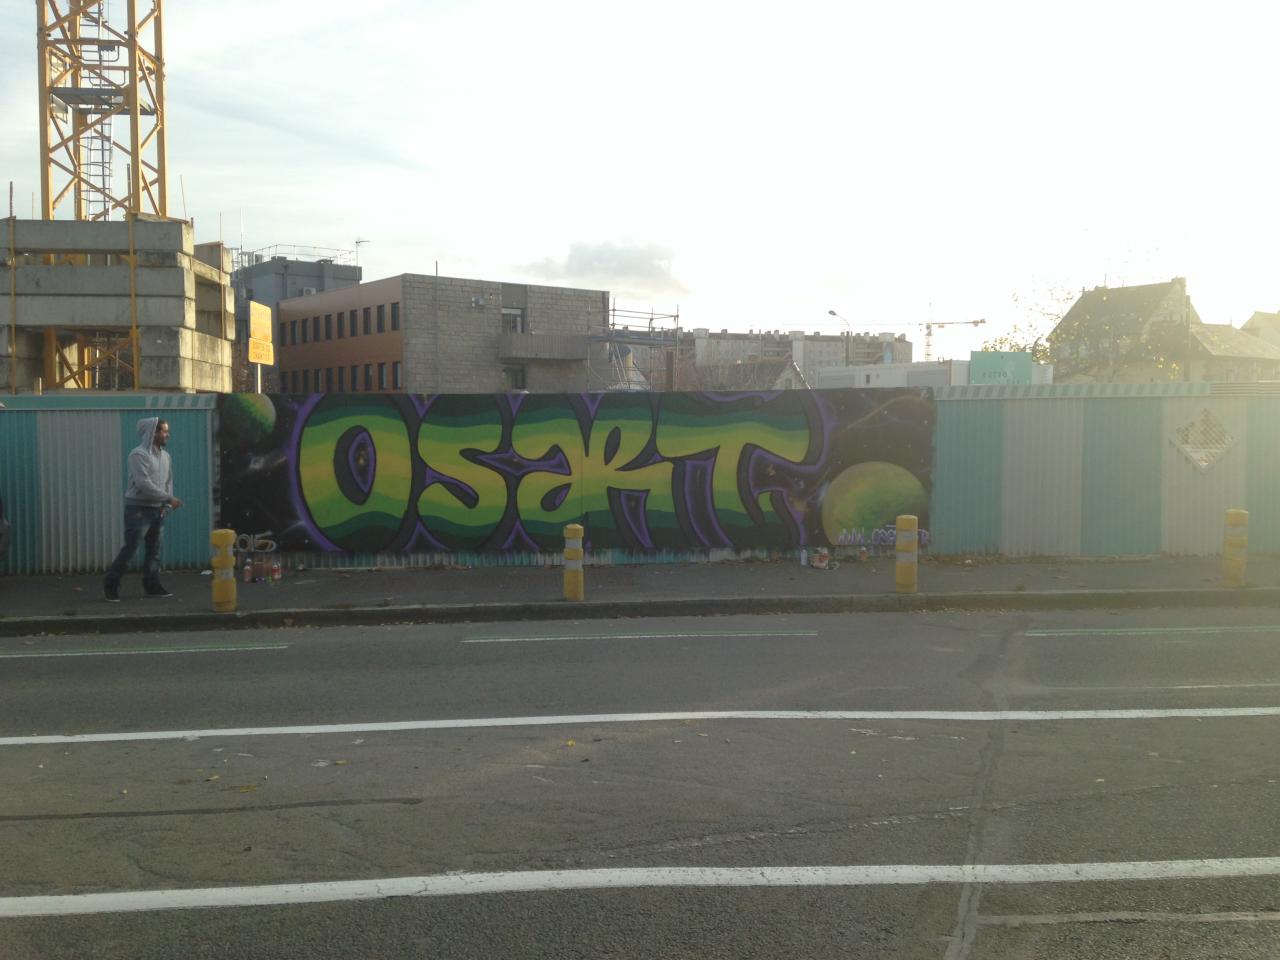 Graff Osart